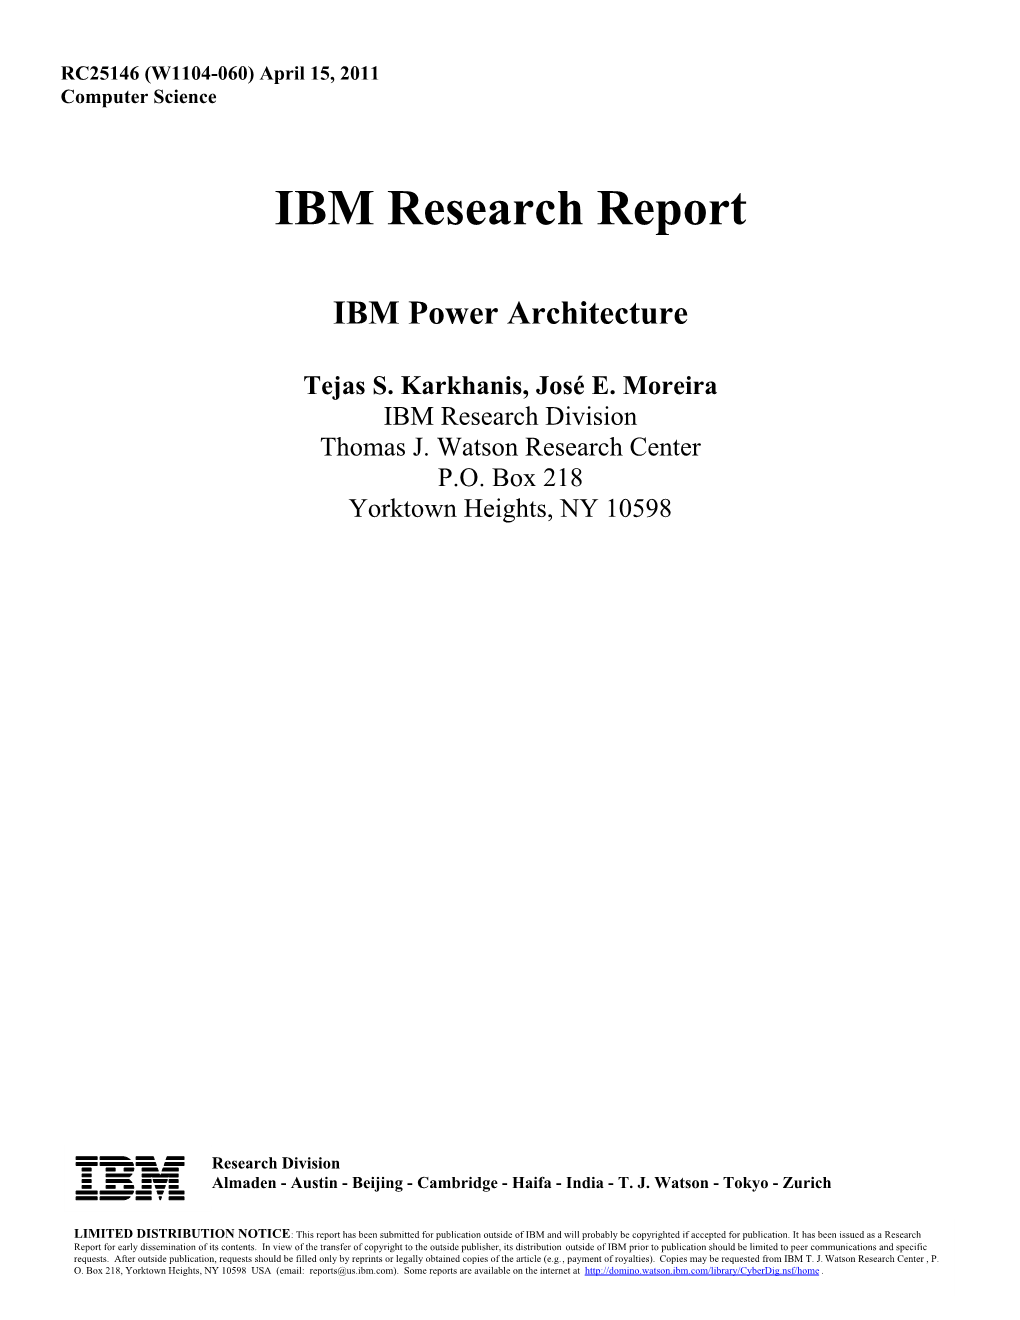 IBM Research Report IBM Power Architecture Tejas S. Karkhanis